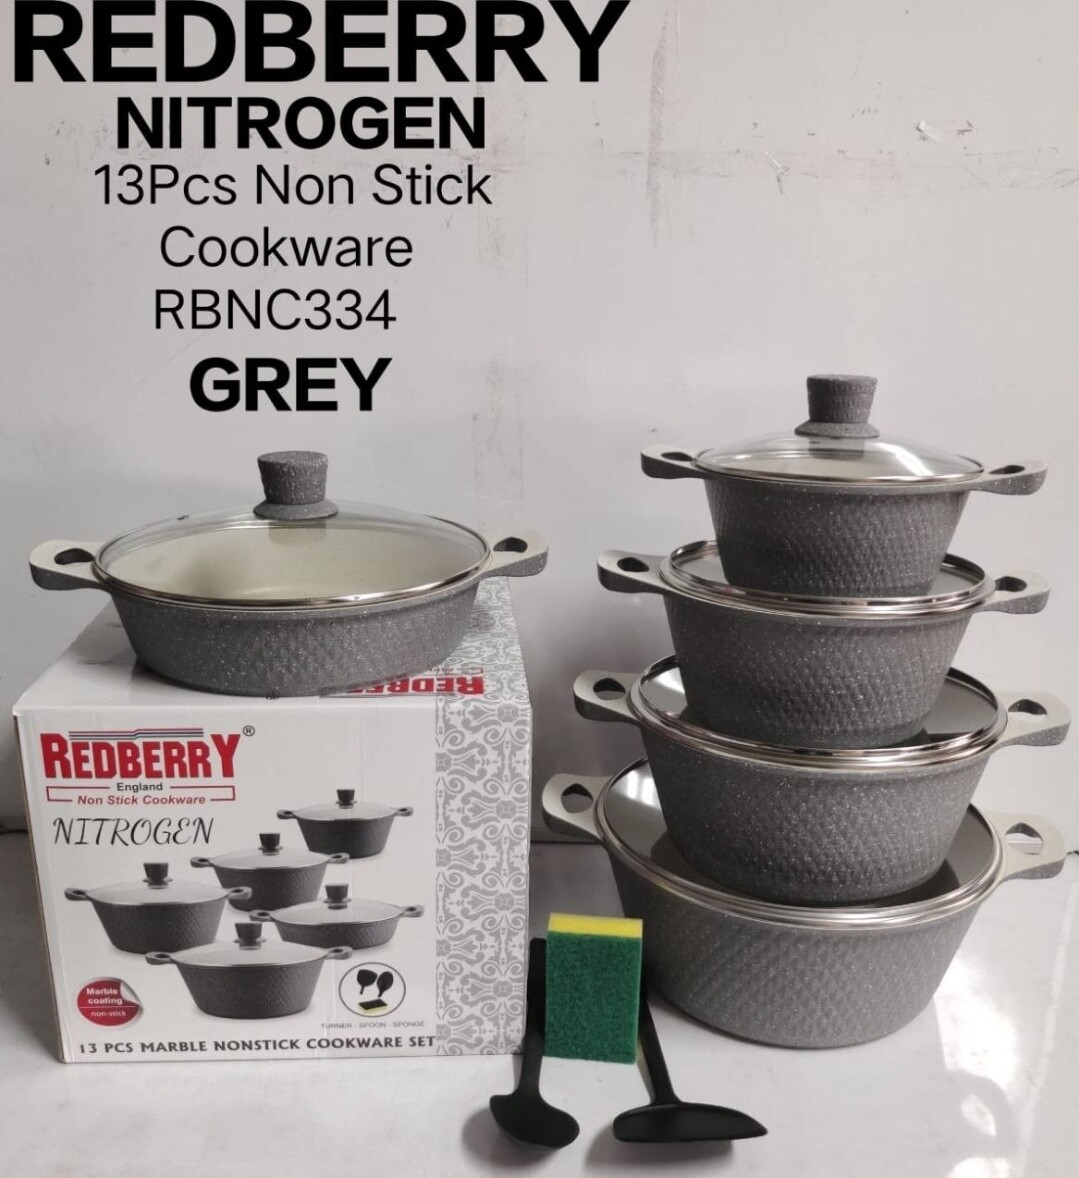 Redberry nitrogen 13pcs non stick cookware set marble colour GREY